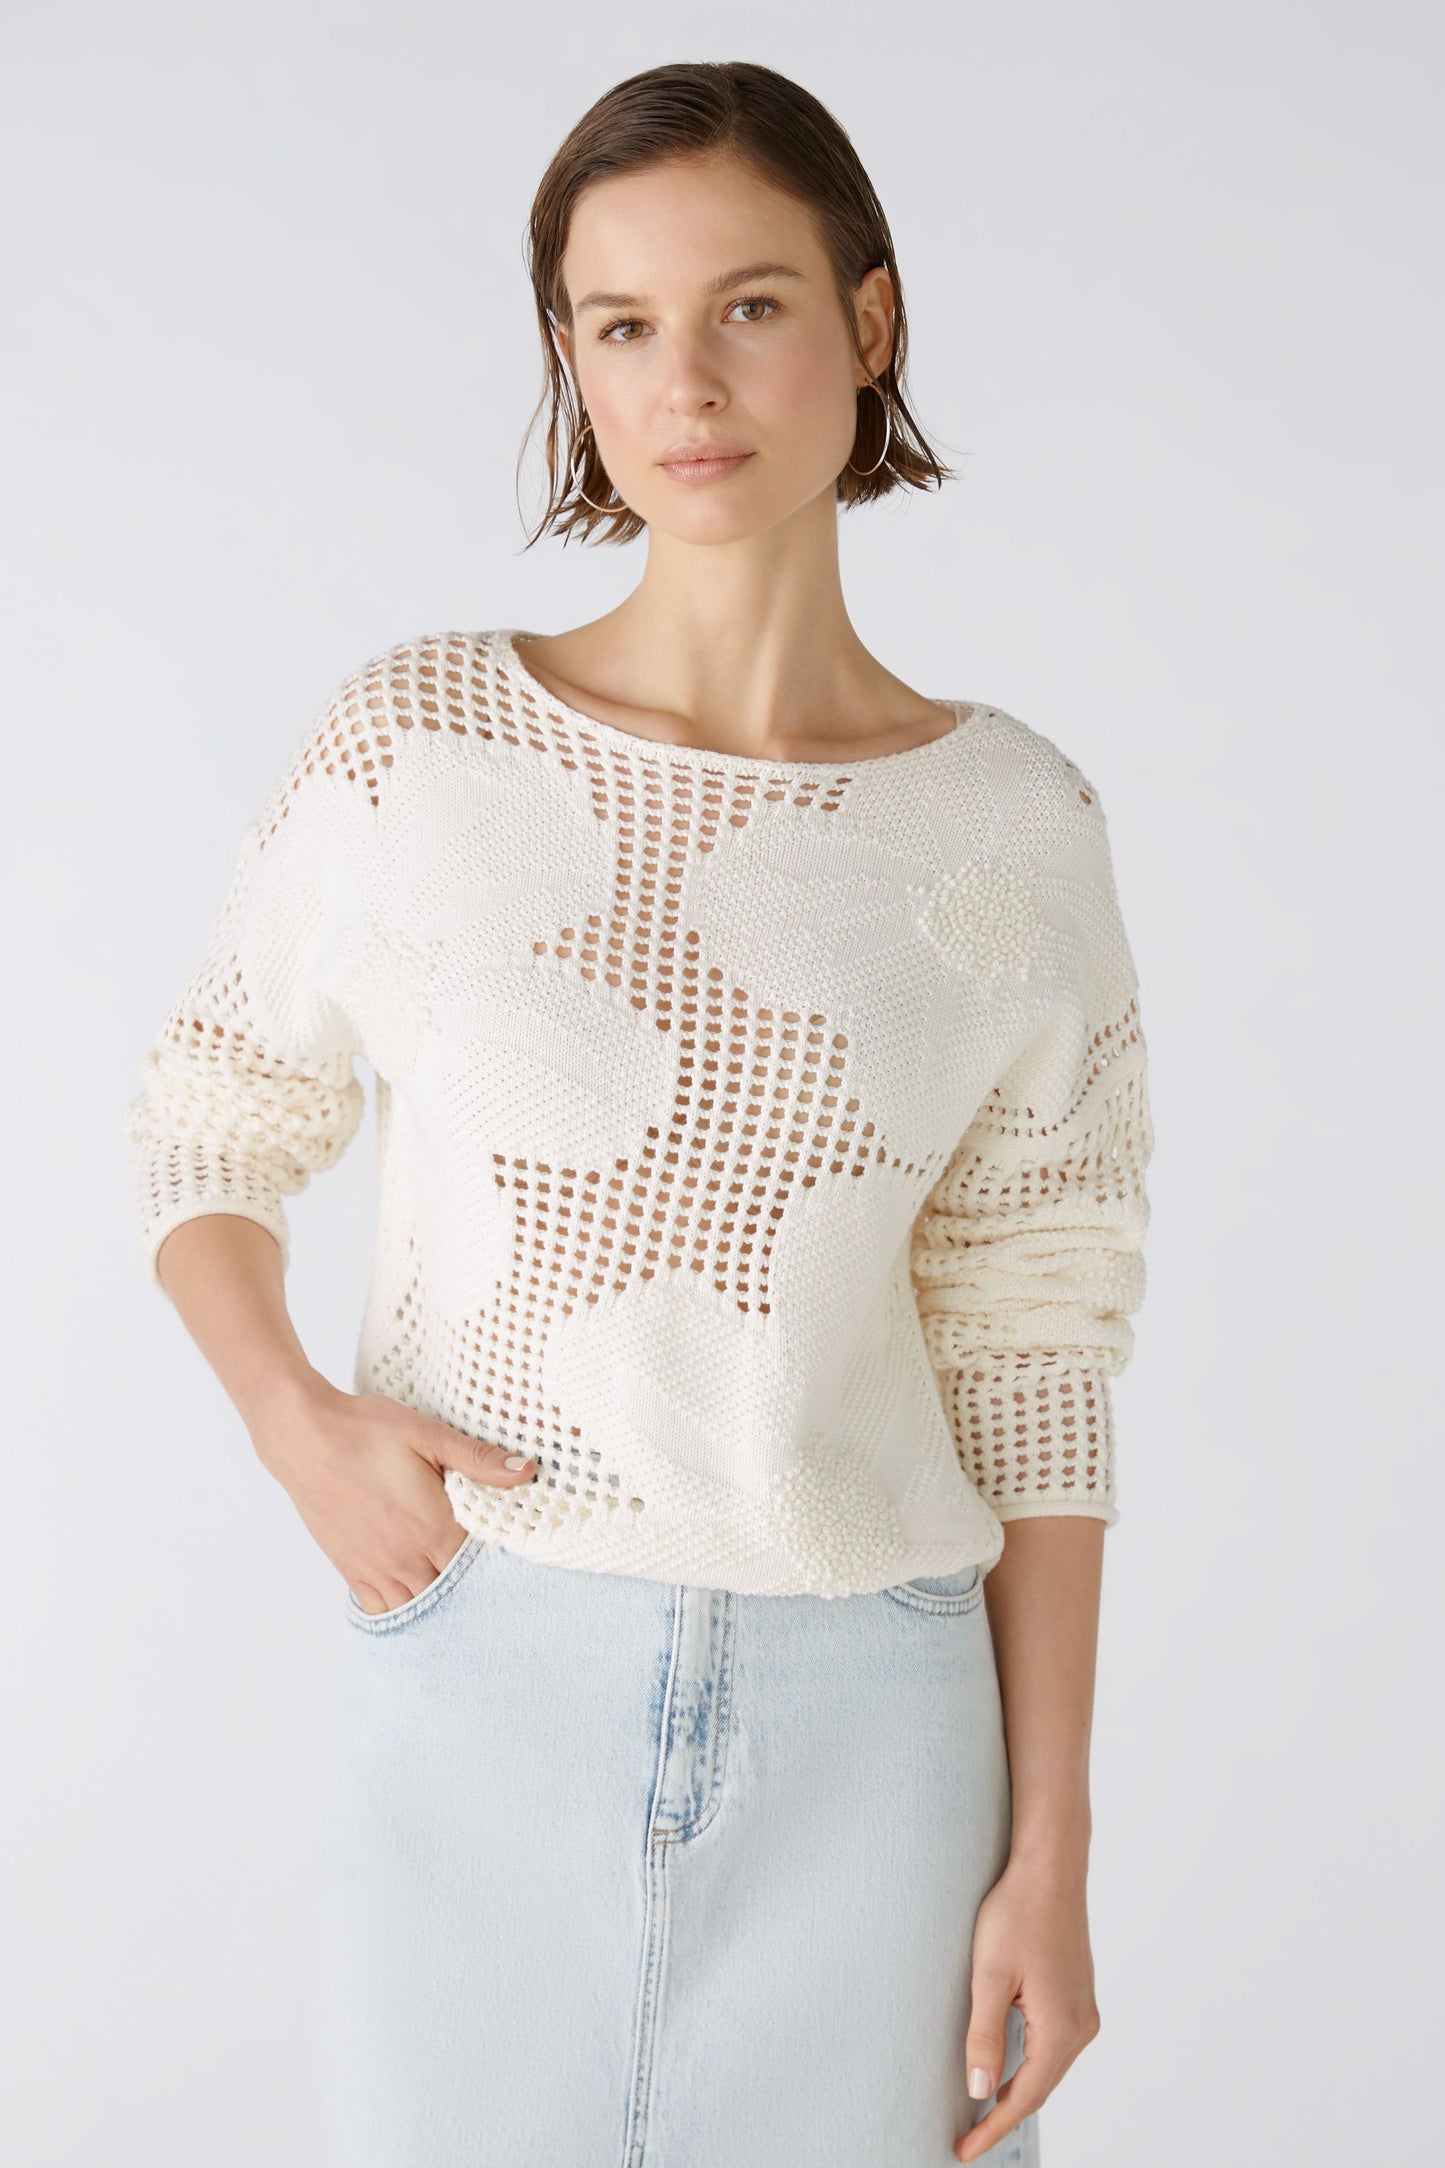 Oui 86664 cotton holey knit sweater